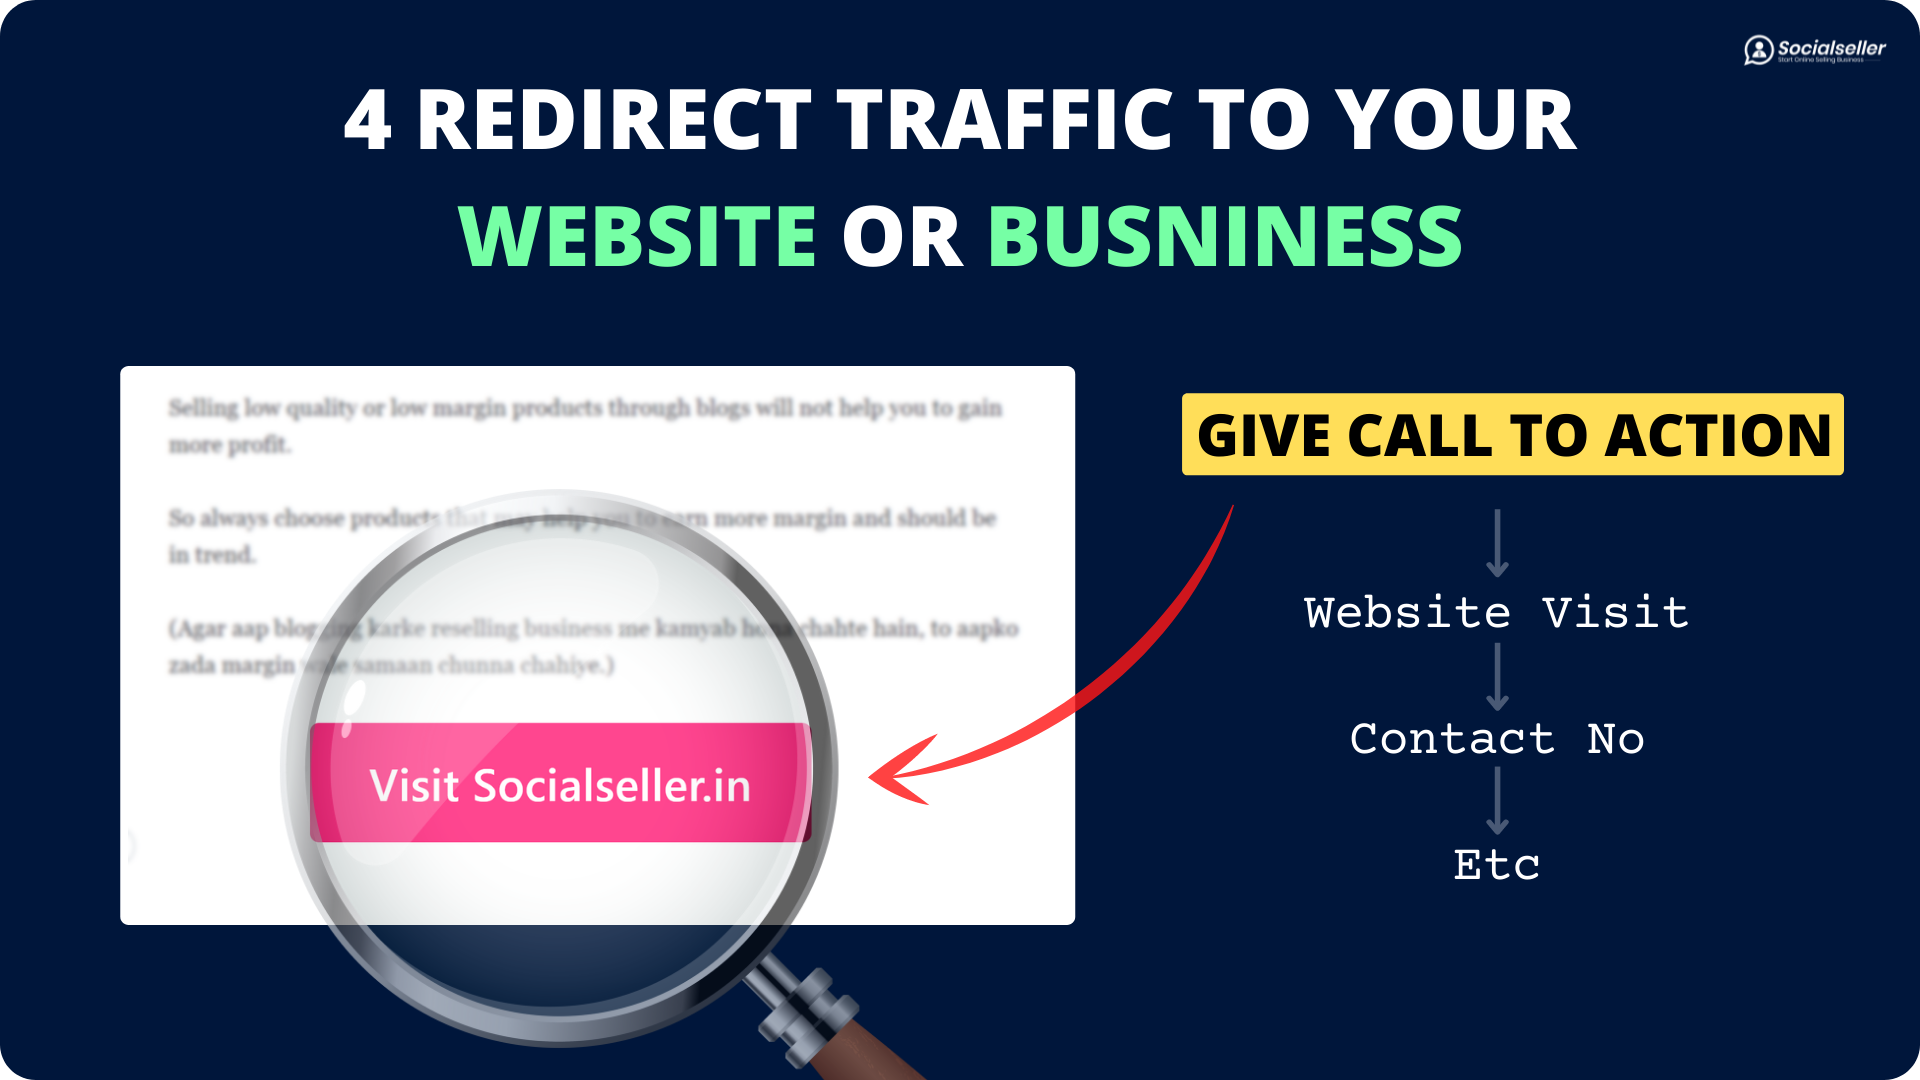 Redirect traffic to website